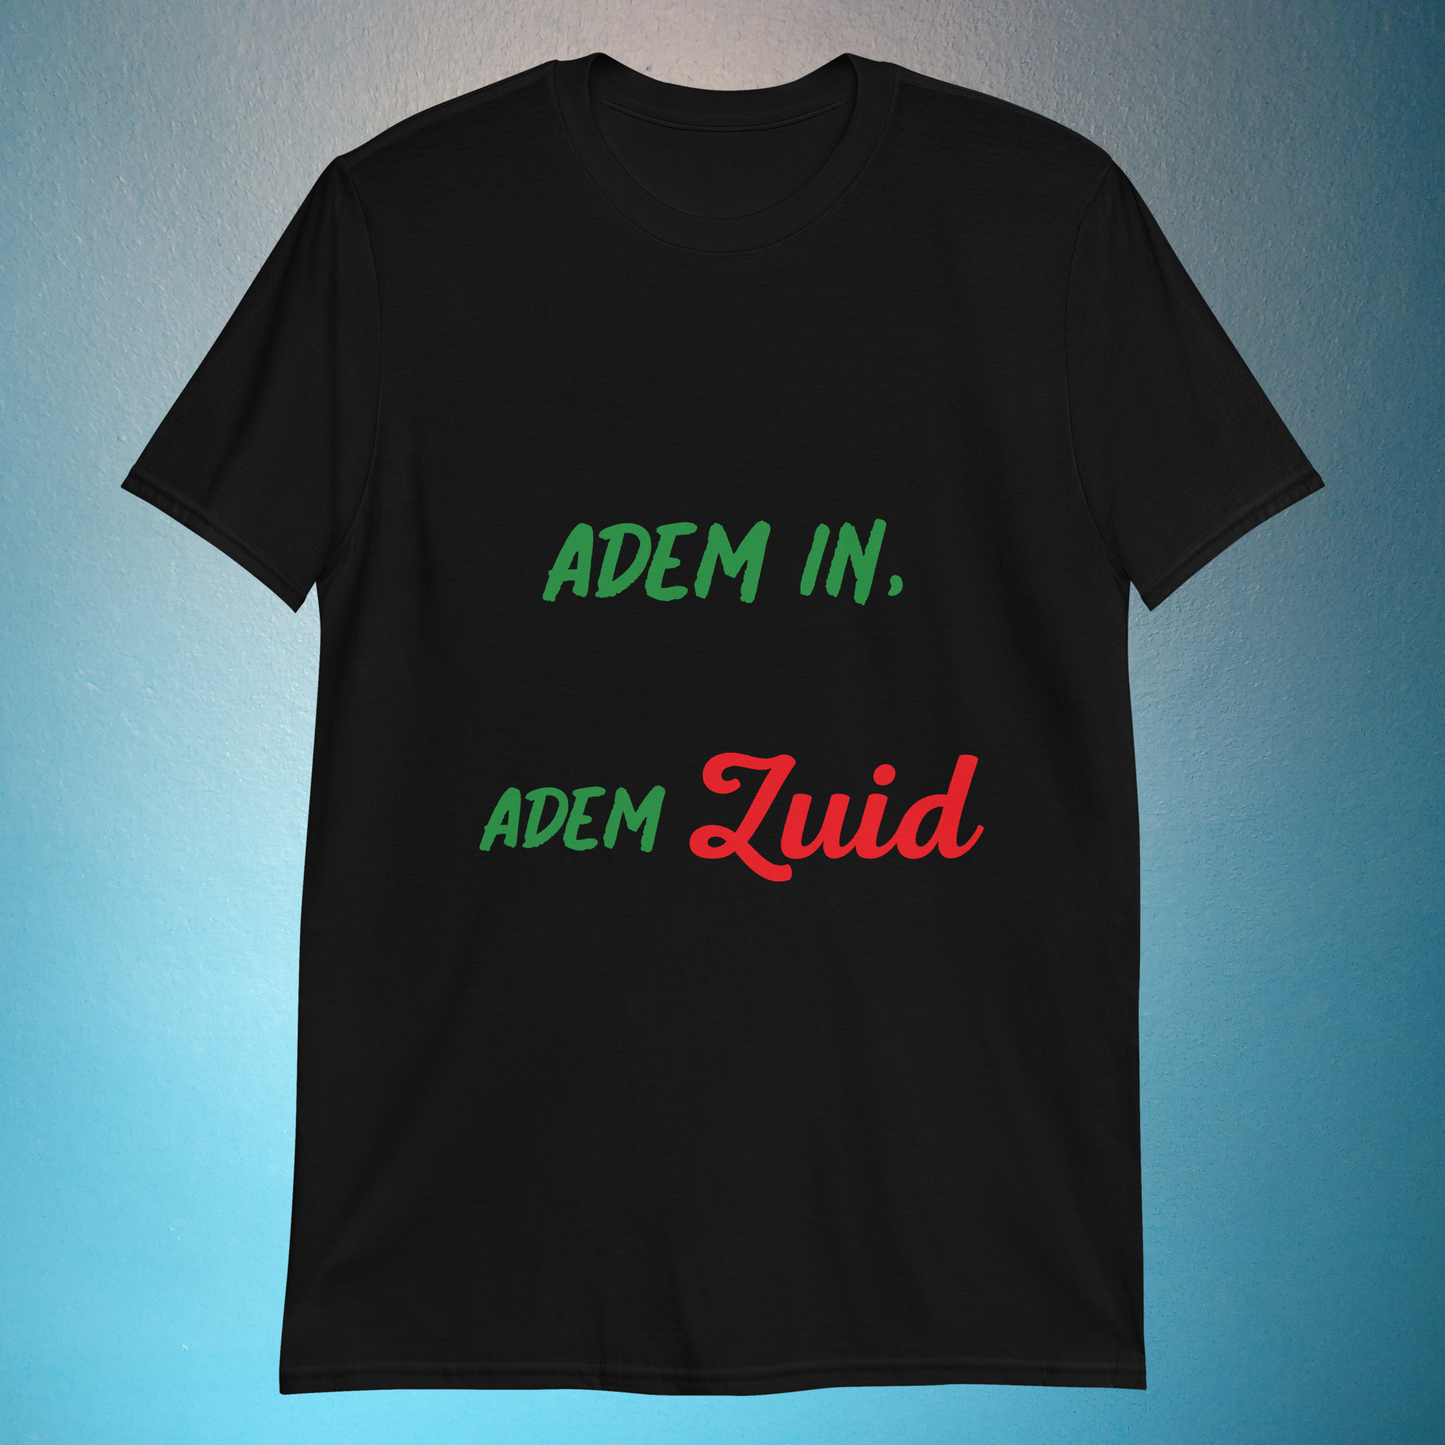 Adem in, Adem Zuid T-shirt